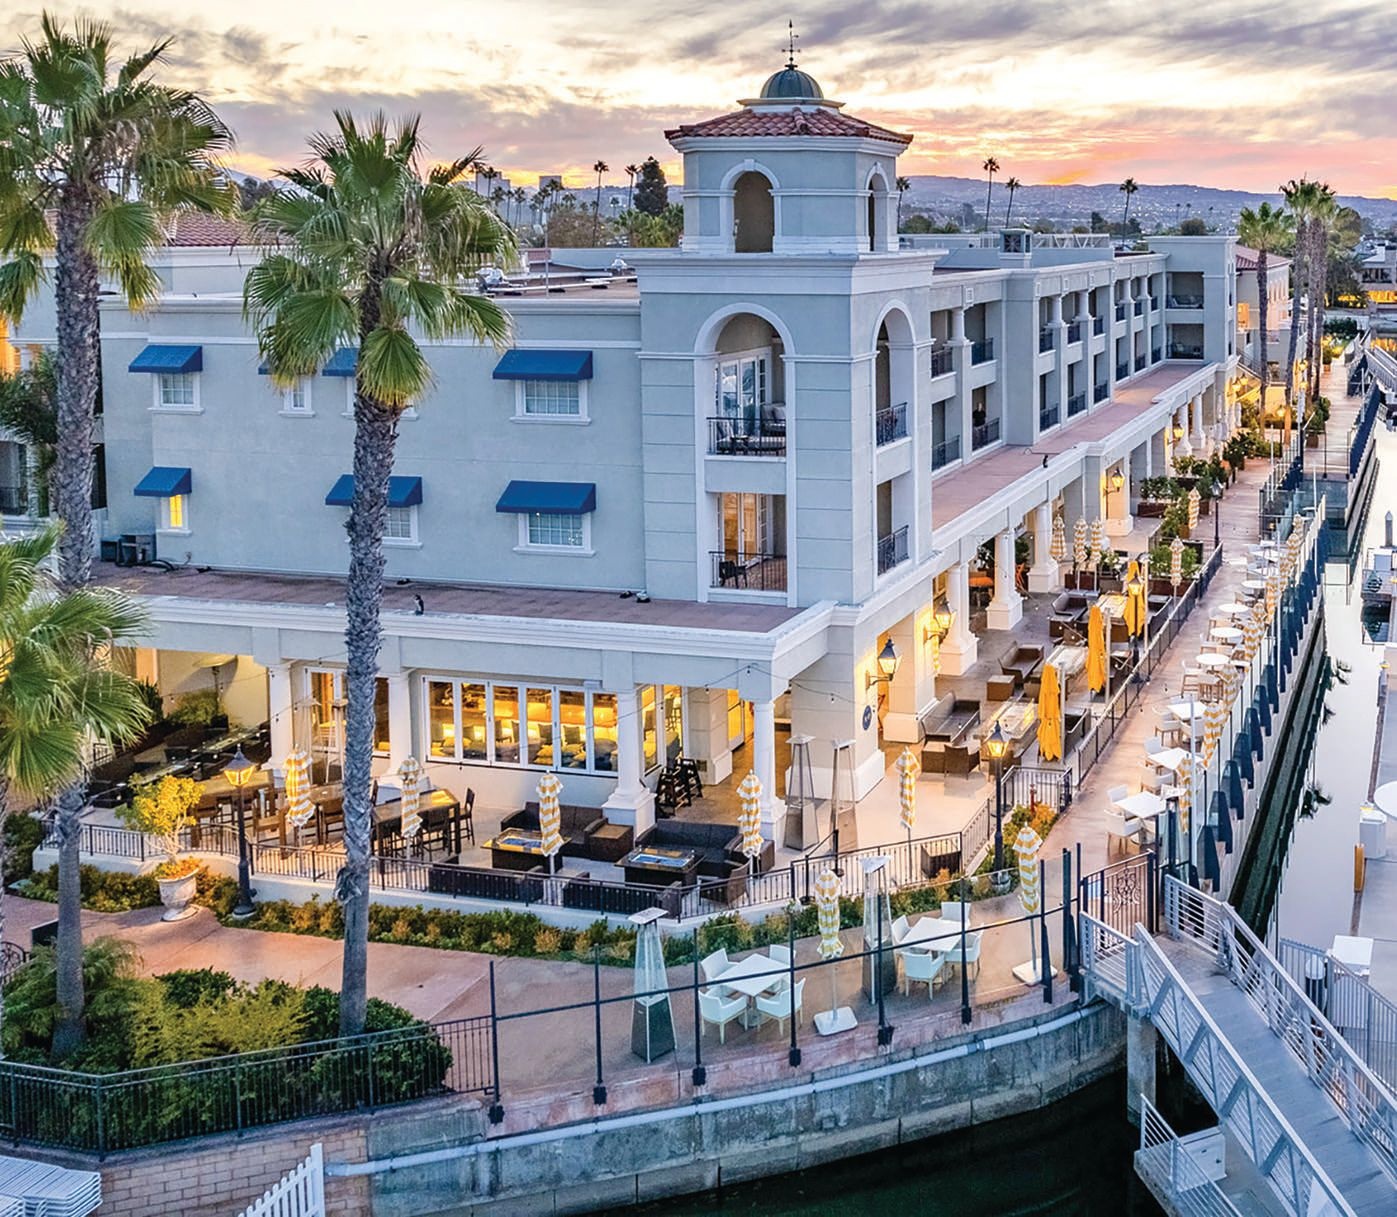 Enjoy waterfront dining and luxury accommodations at Balboa Bay Resort. PHOTO VISIT NEWPORT BEACH